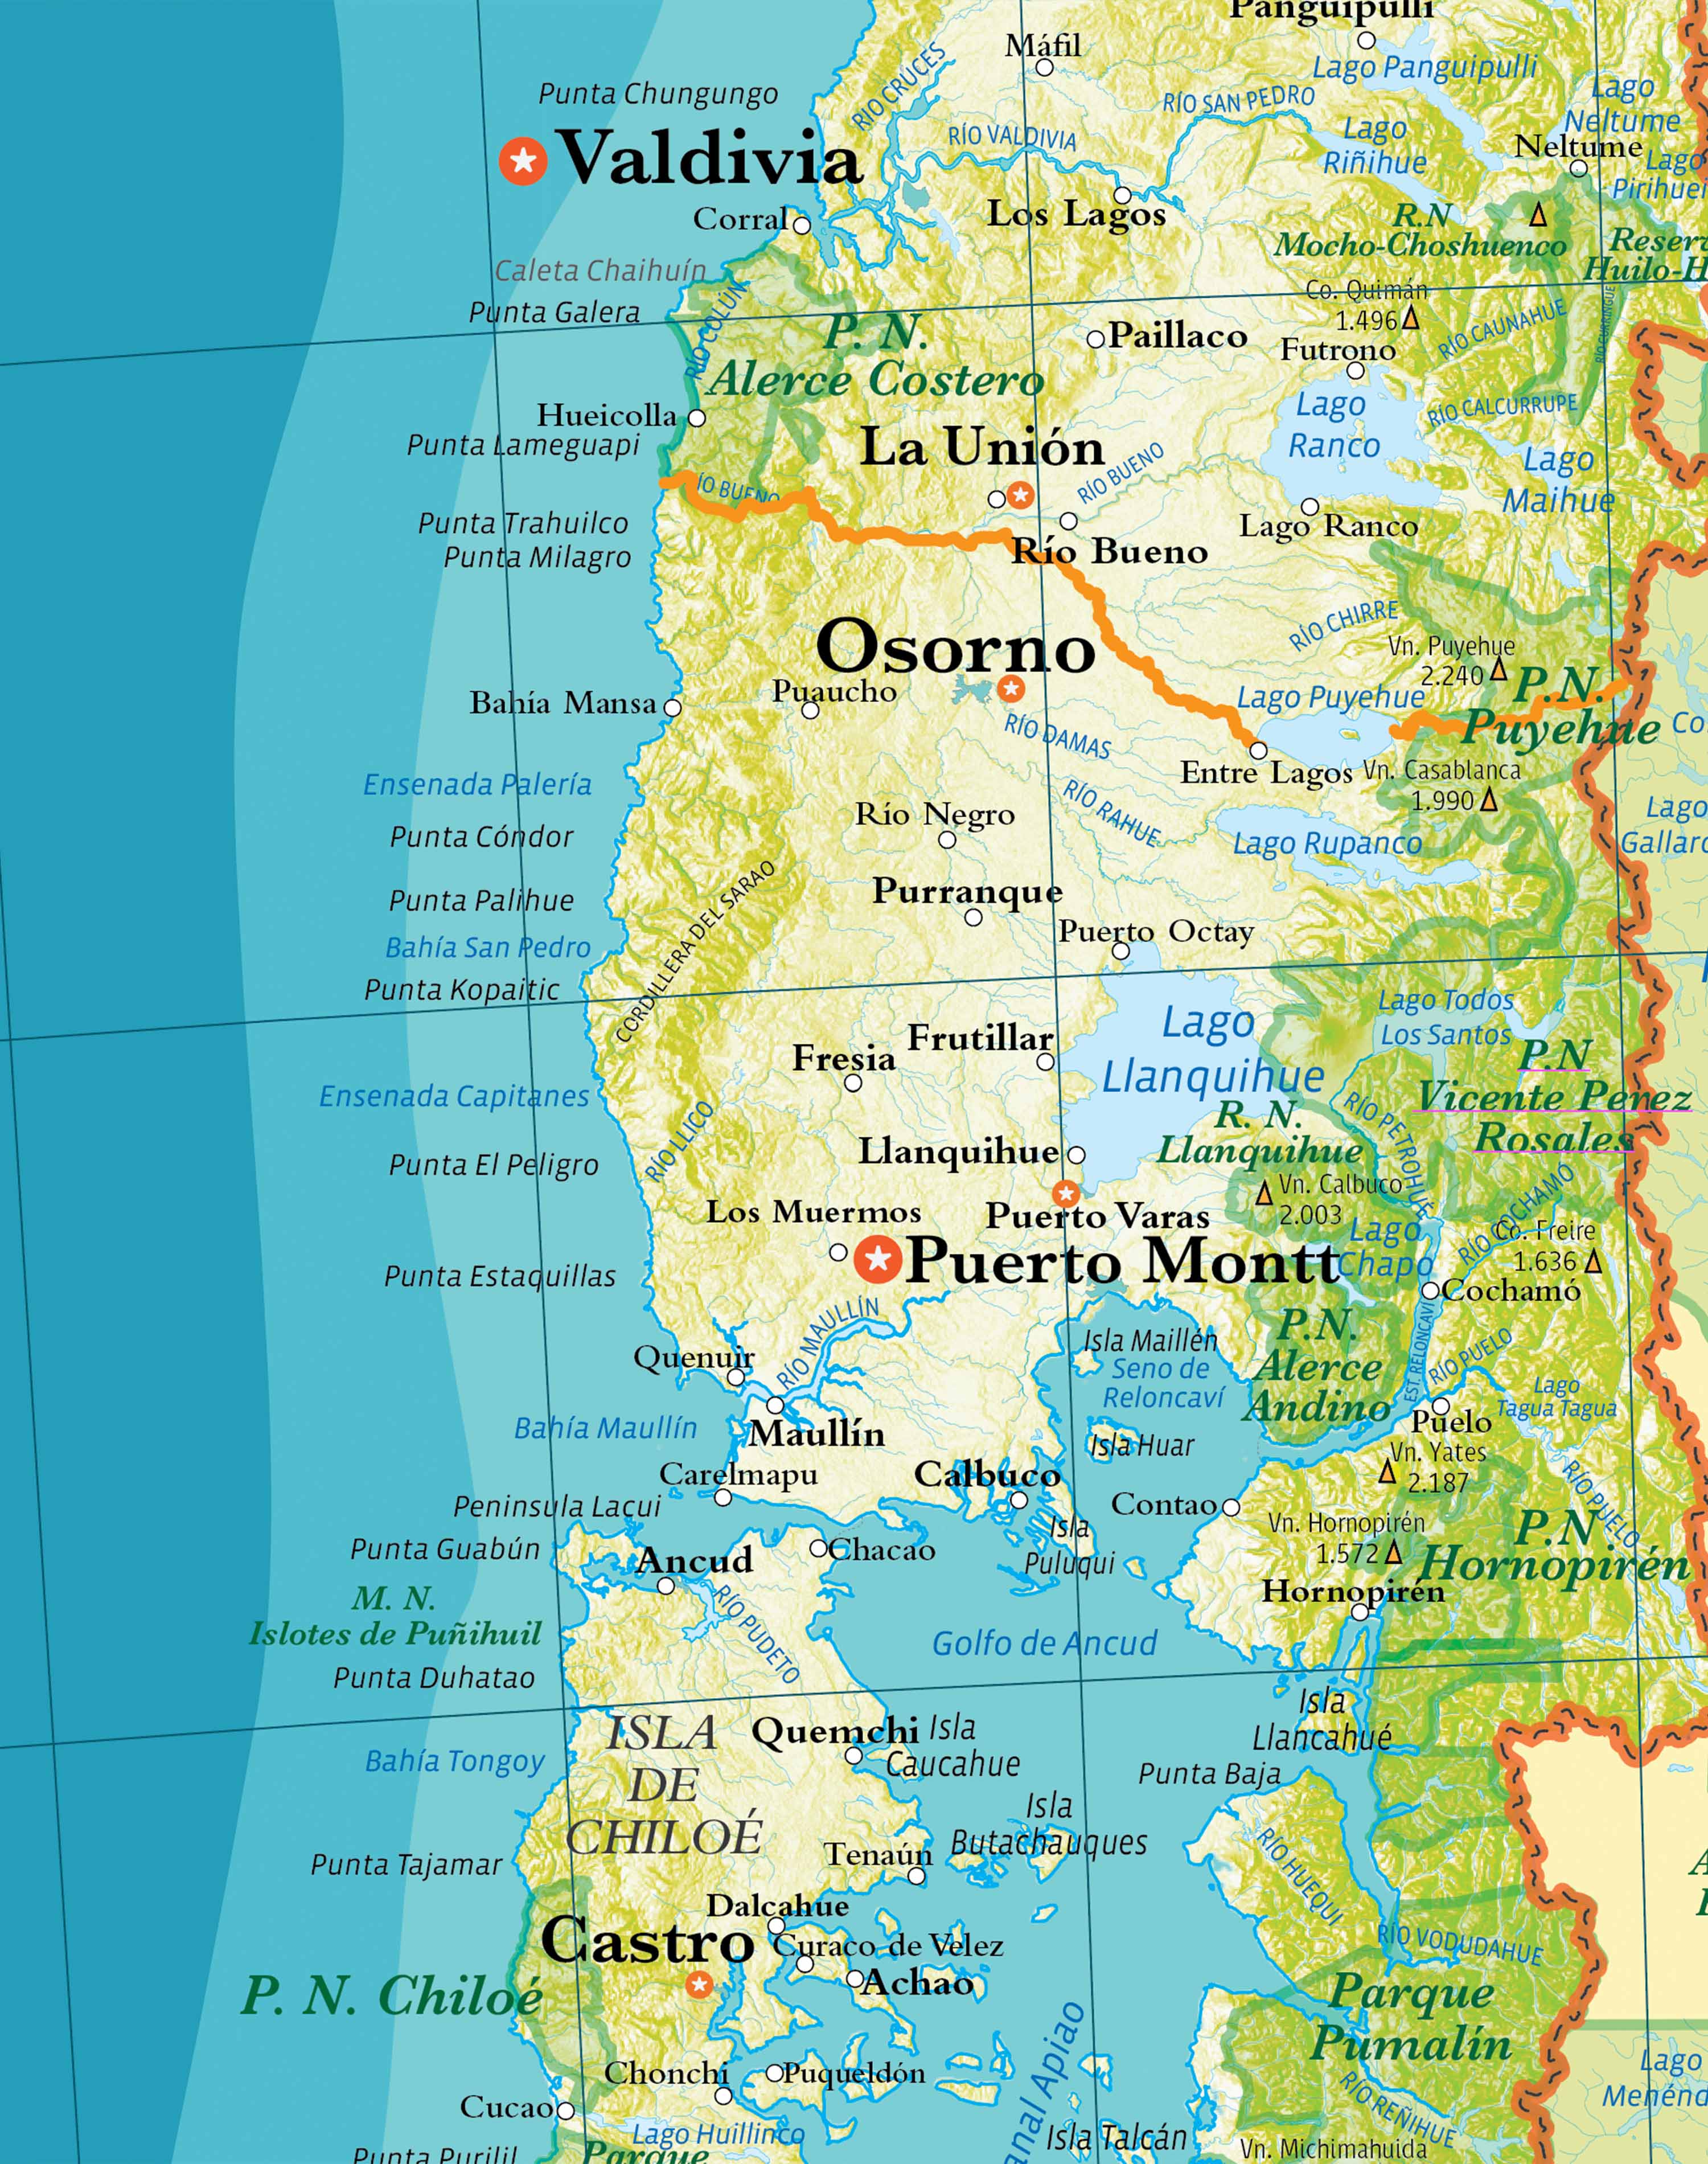 Mapa de Chile Físico Gran Formato - Lámina con Flejes